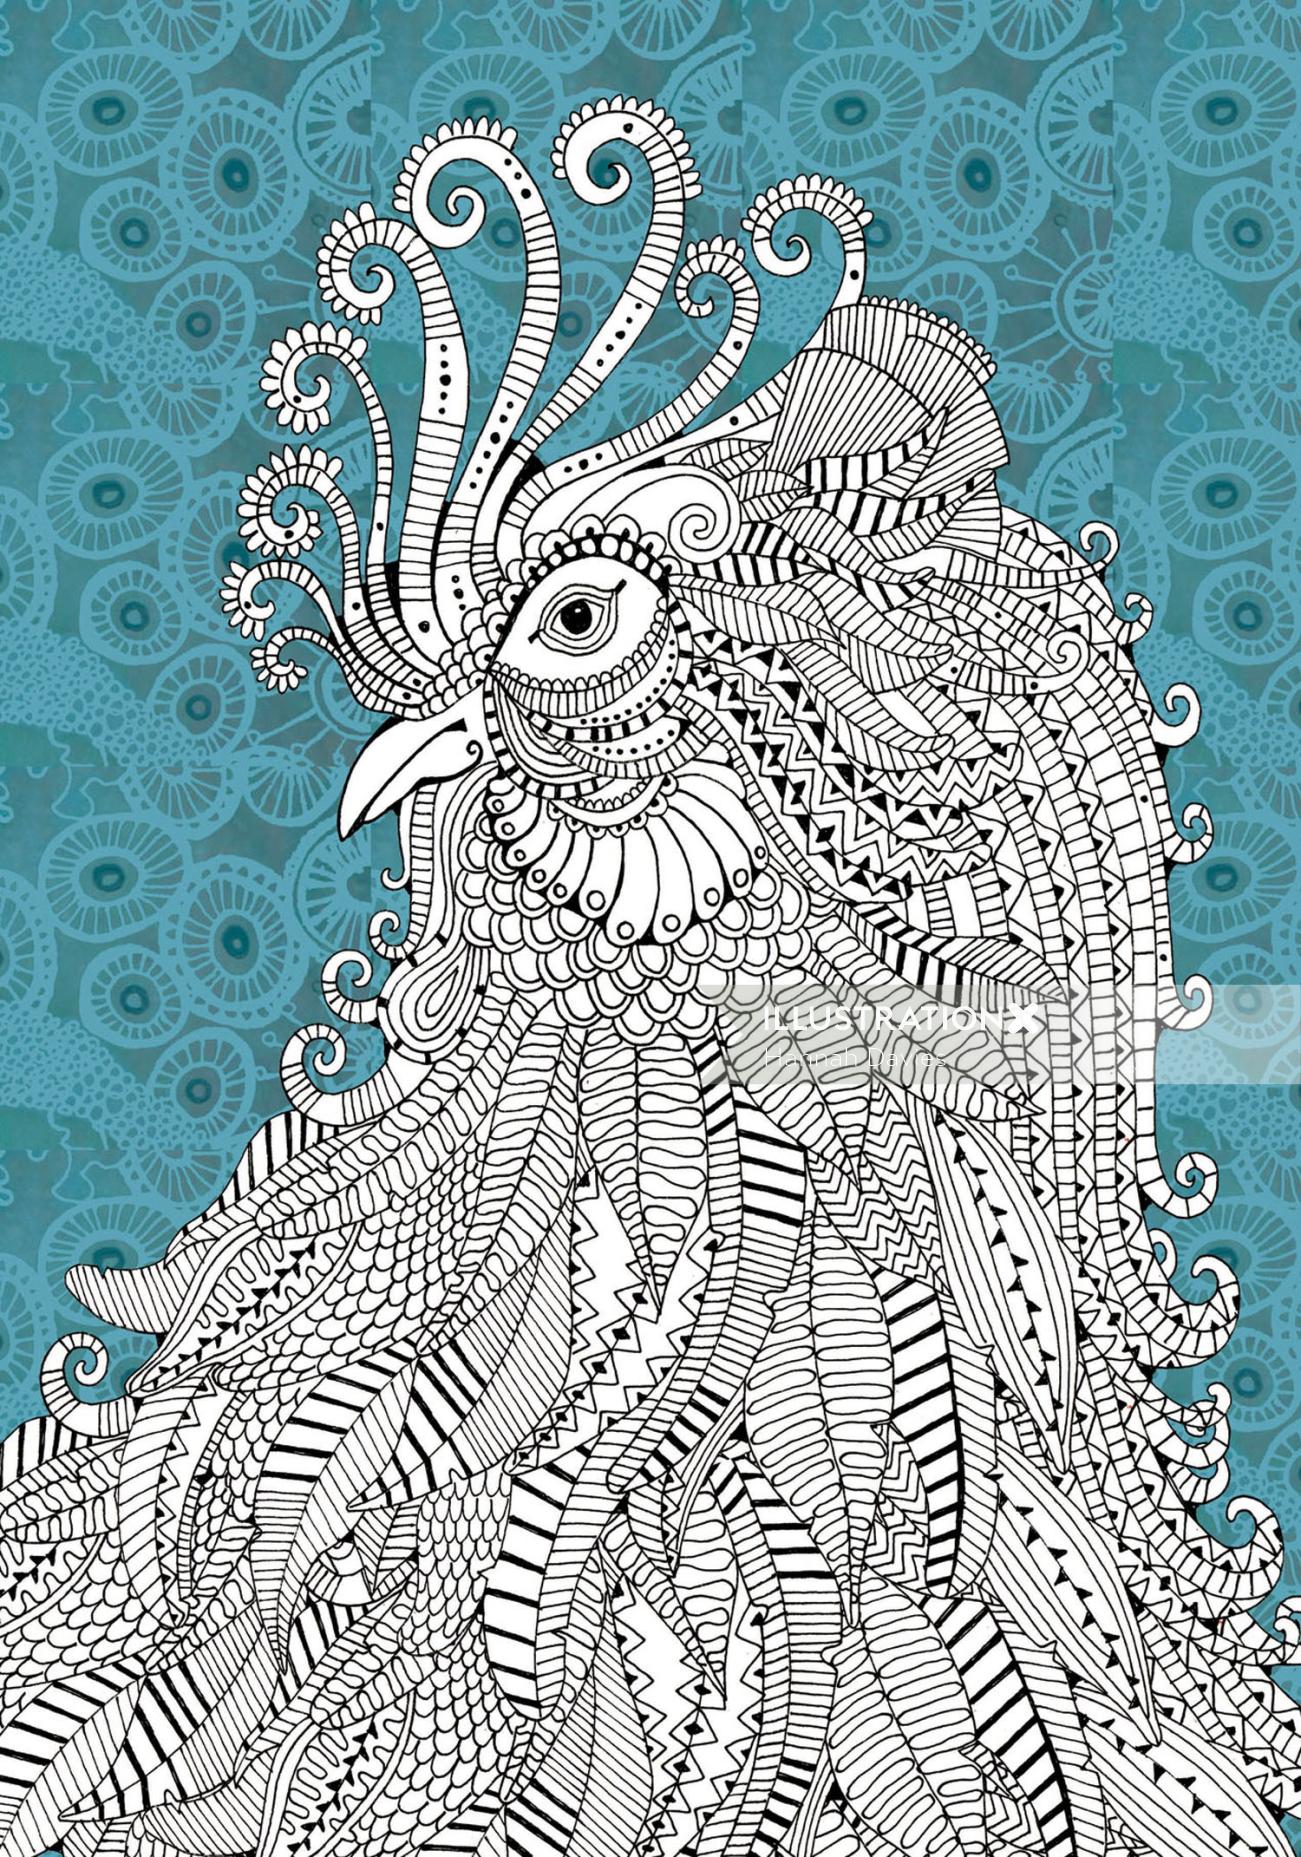 Cockerel illustration by Hannah Davies